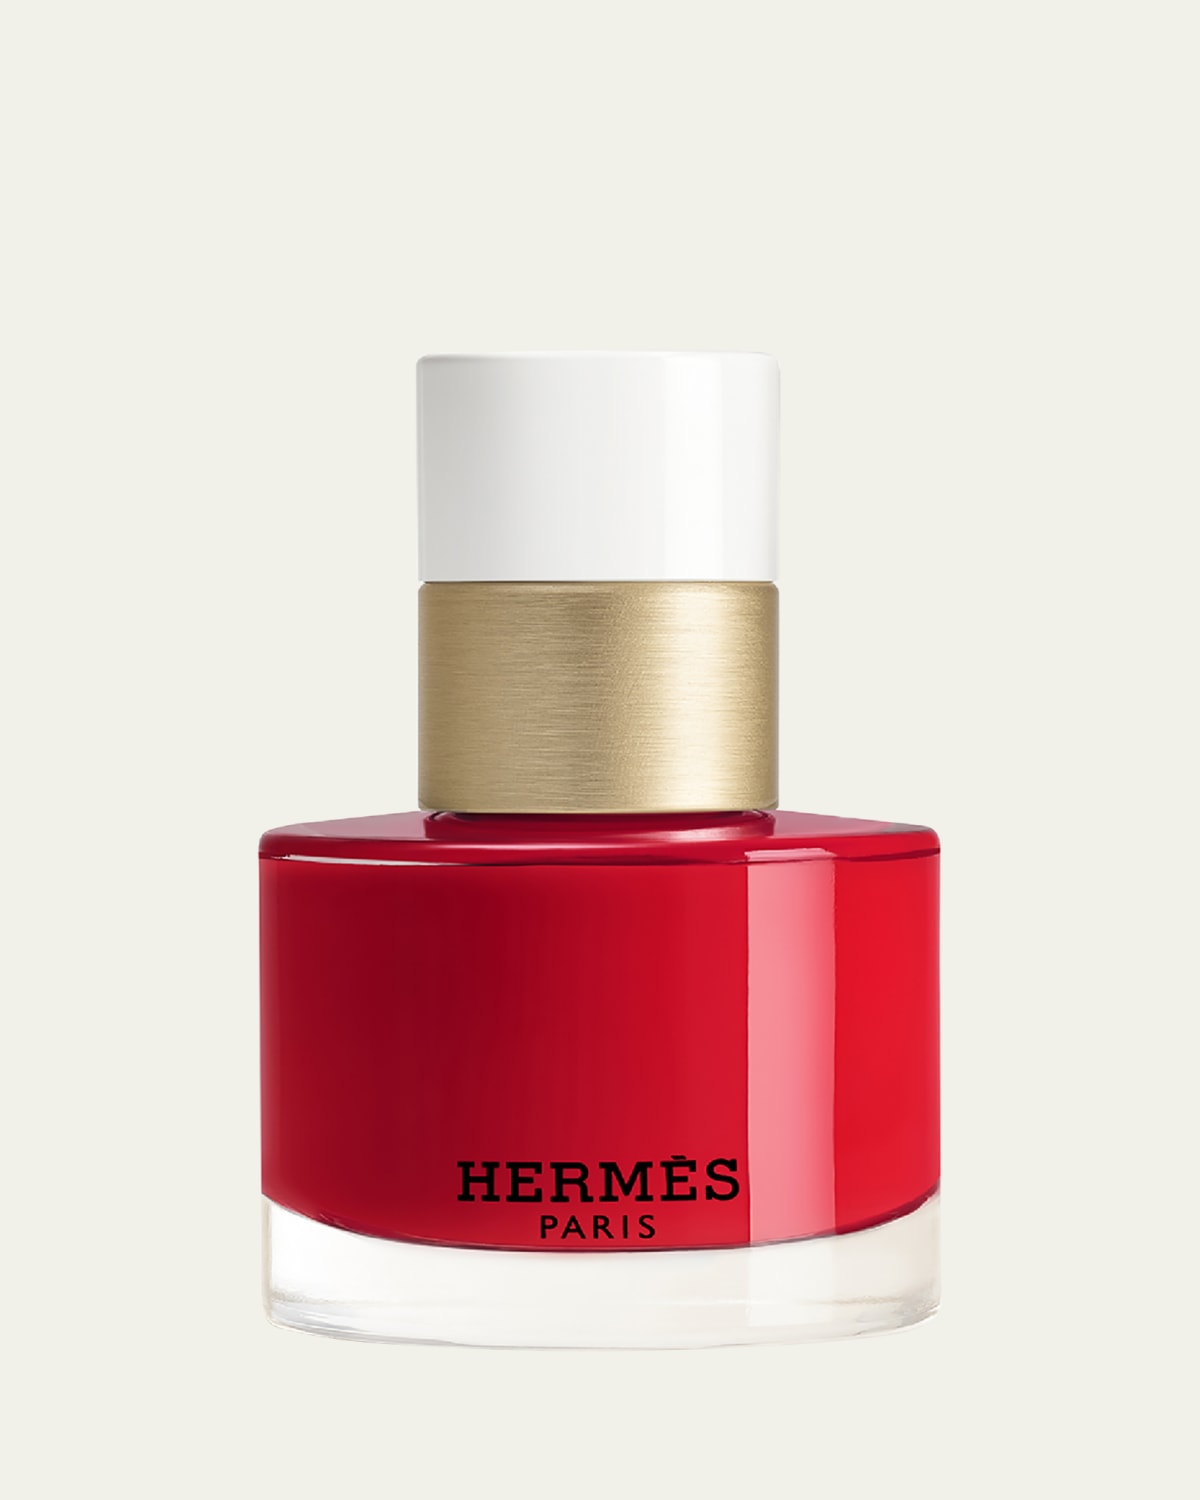 Les Mains Hermes Nail Enamel | Bergdorf Goodman